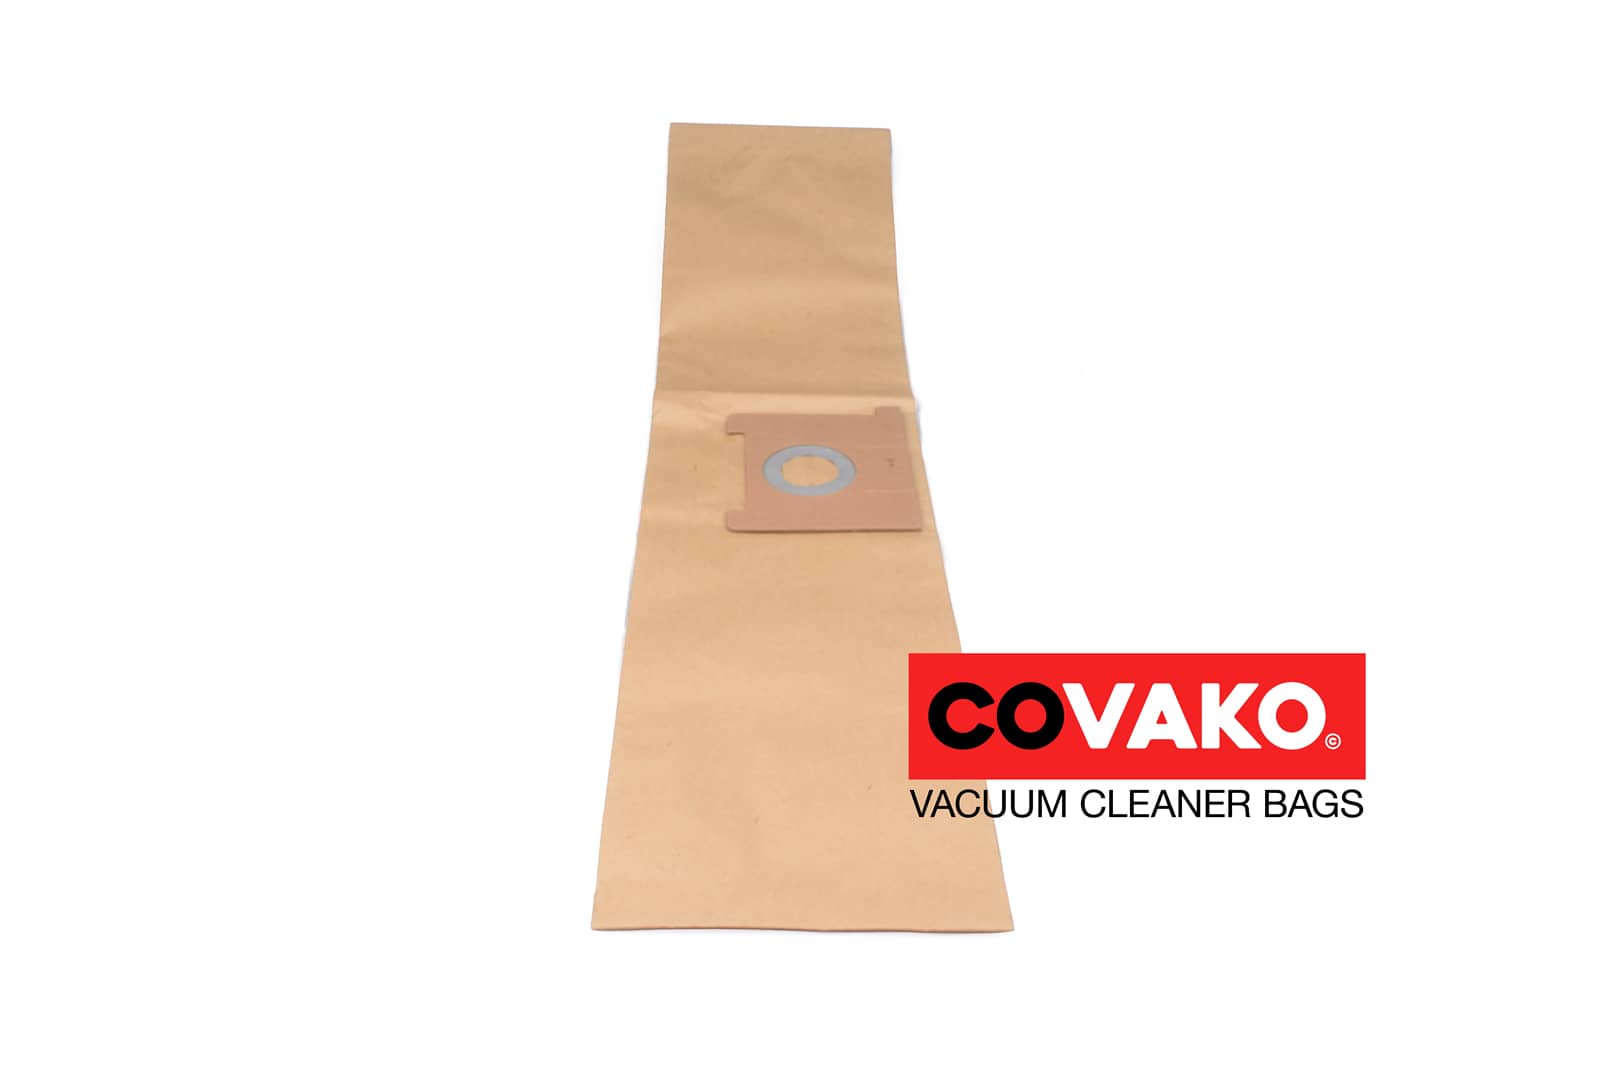 Fast 9 B / Paper - Fast vacuum cleaner bags